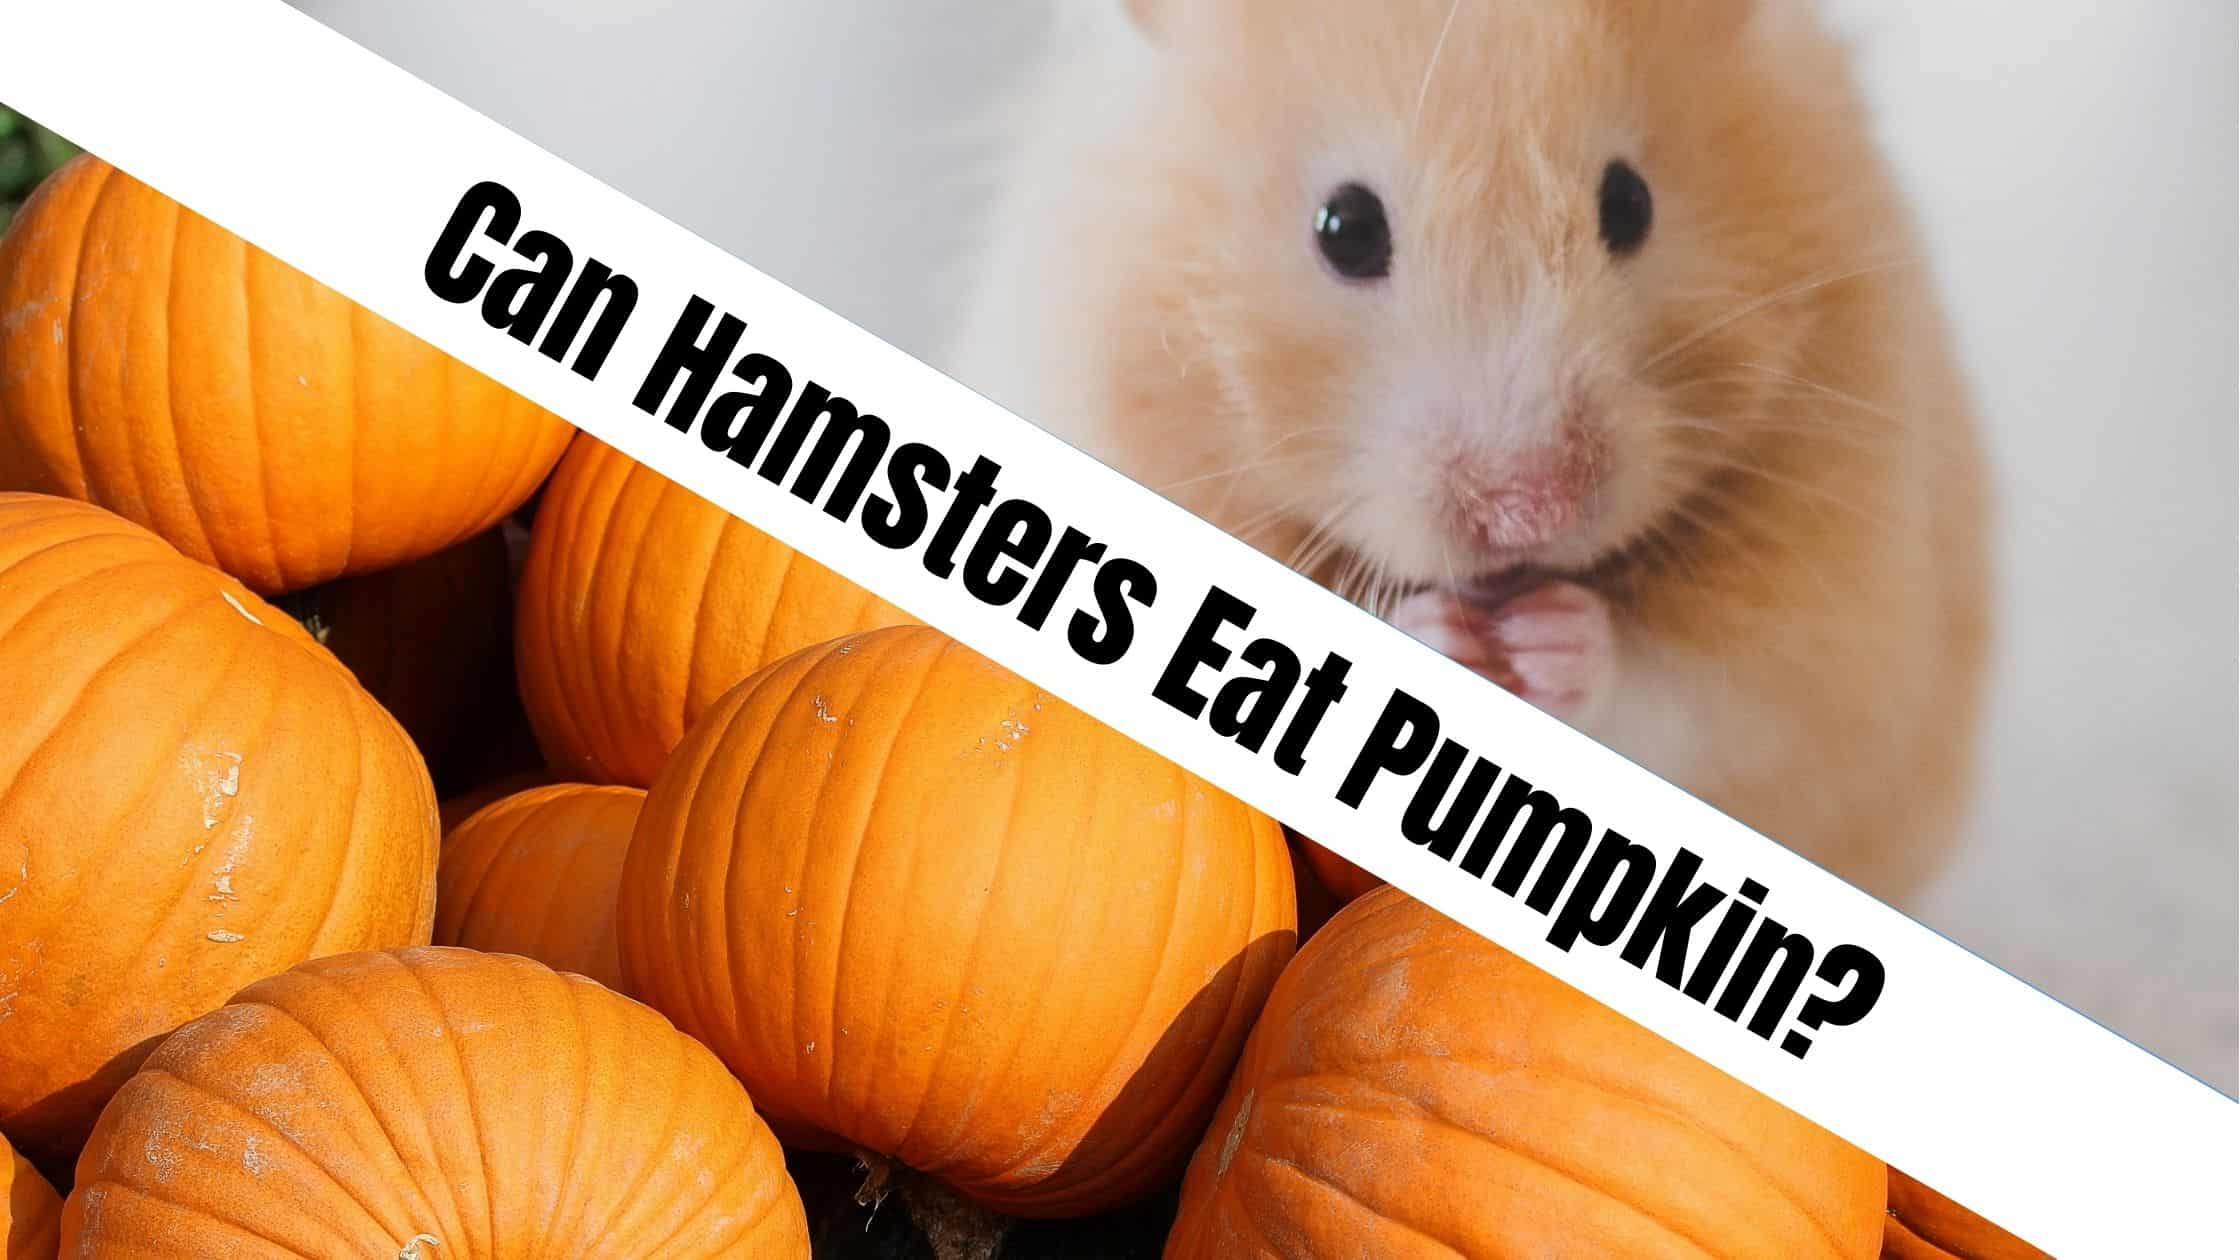 Can Hamsters Eat Pumpkin?